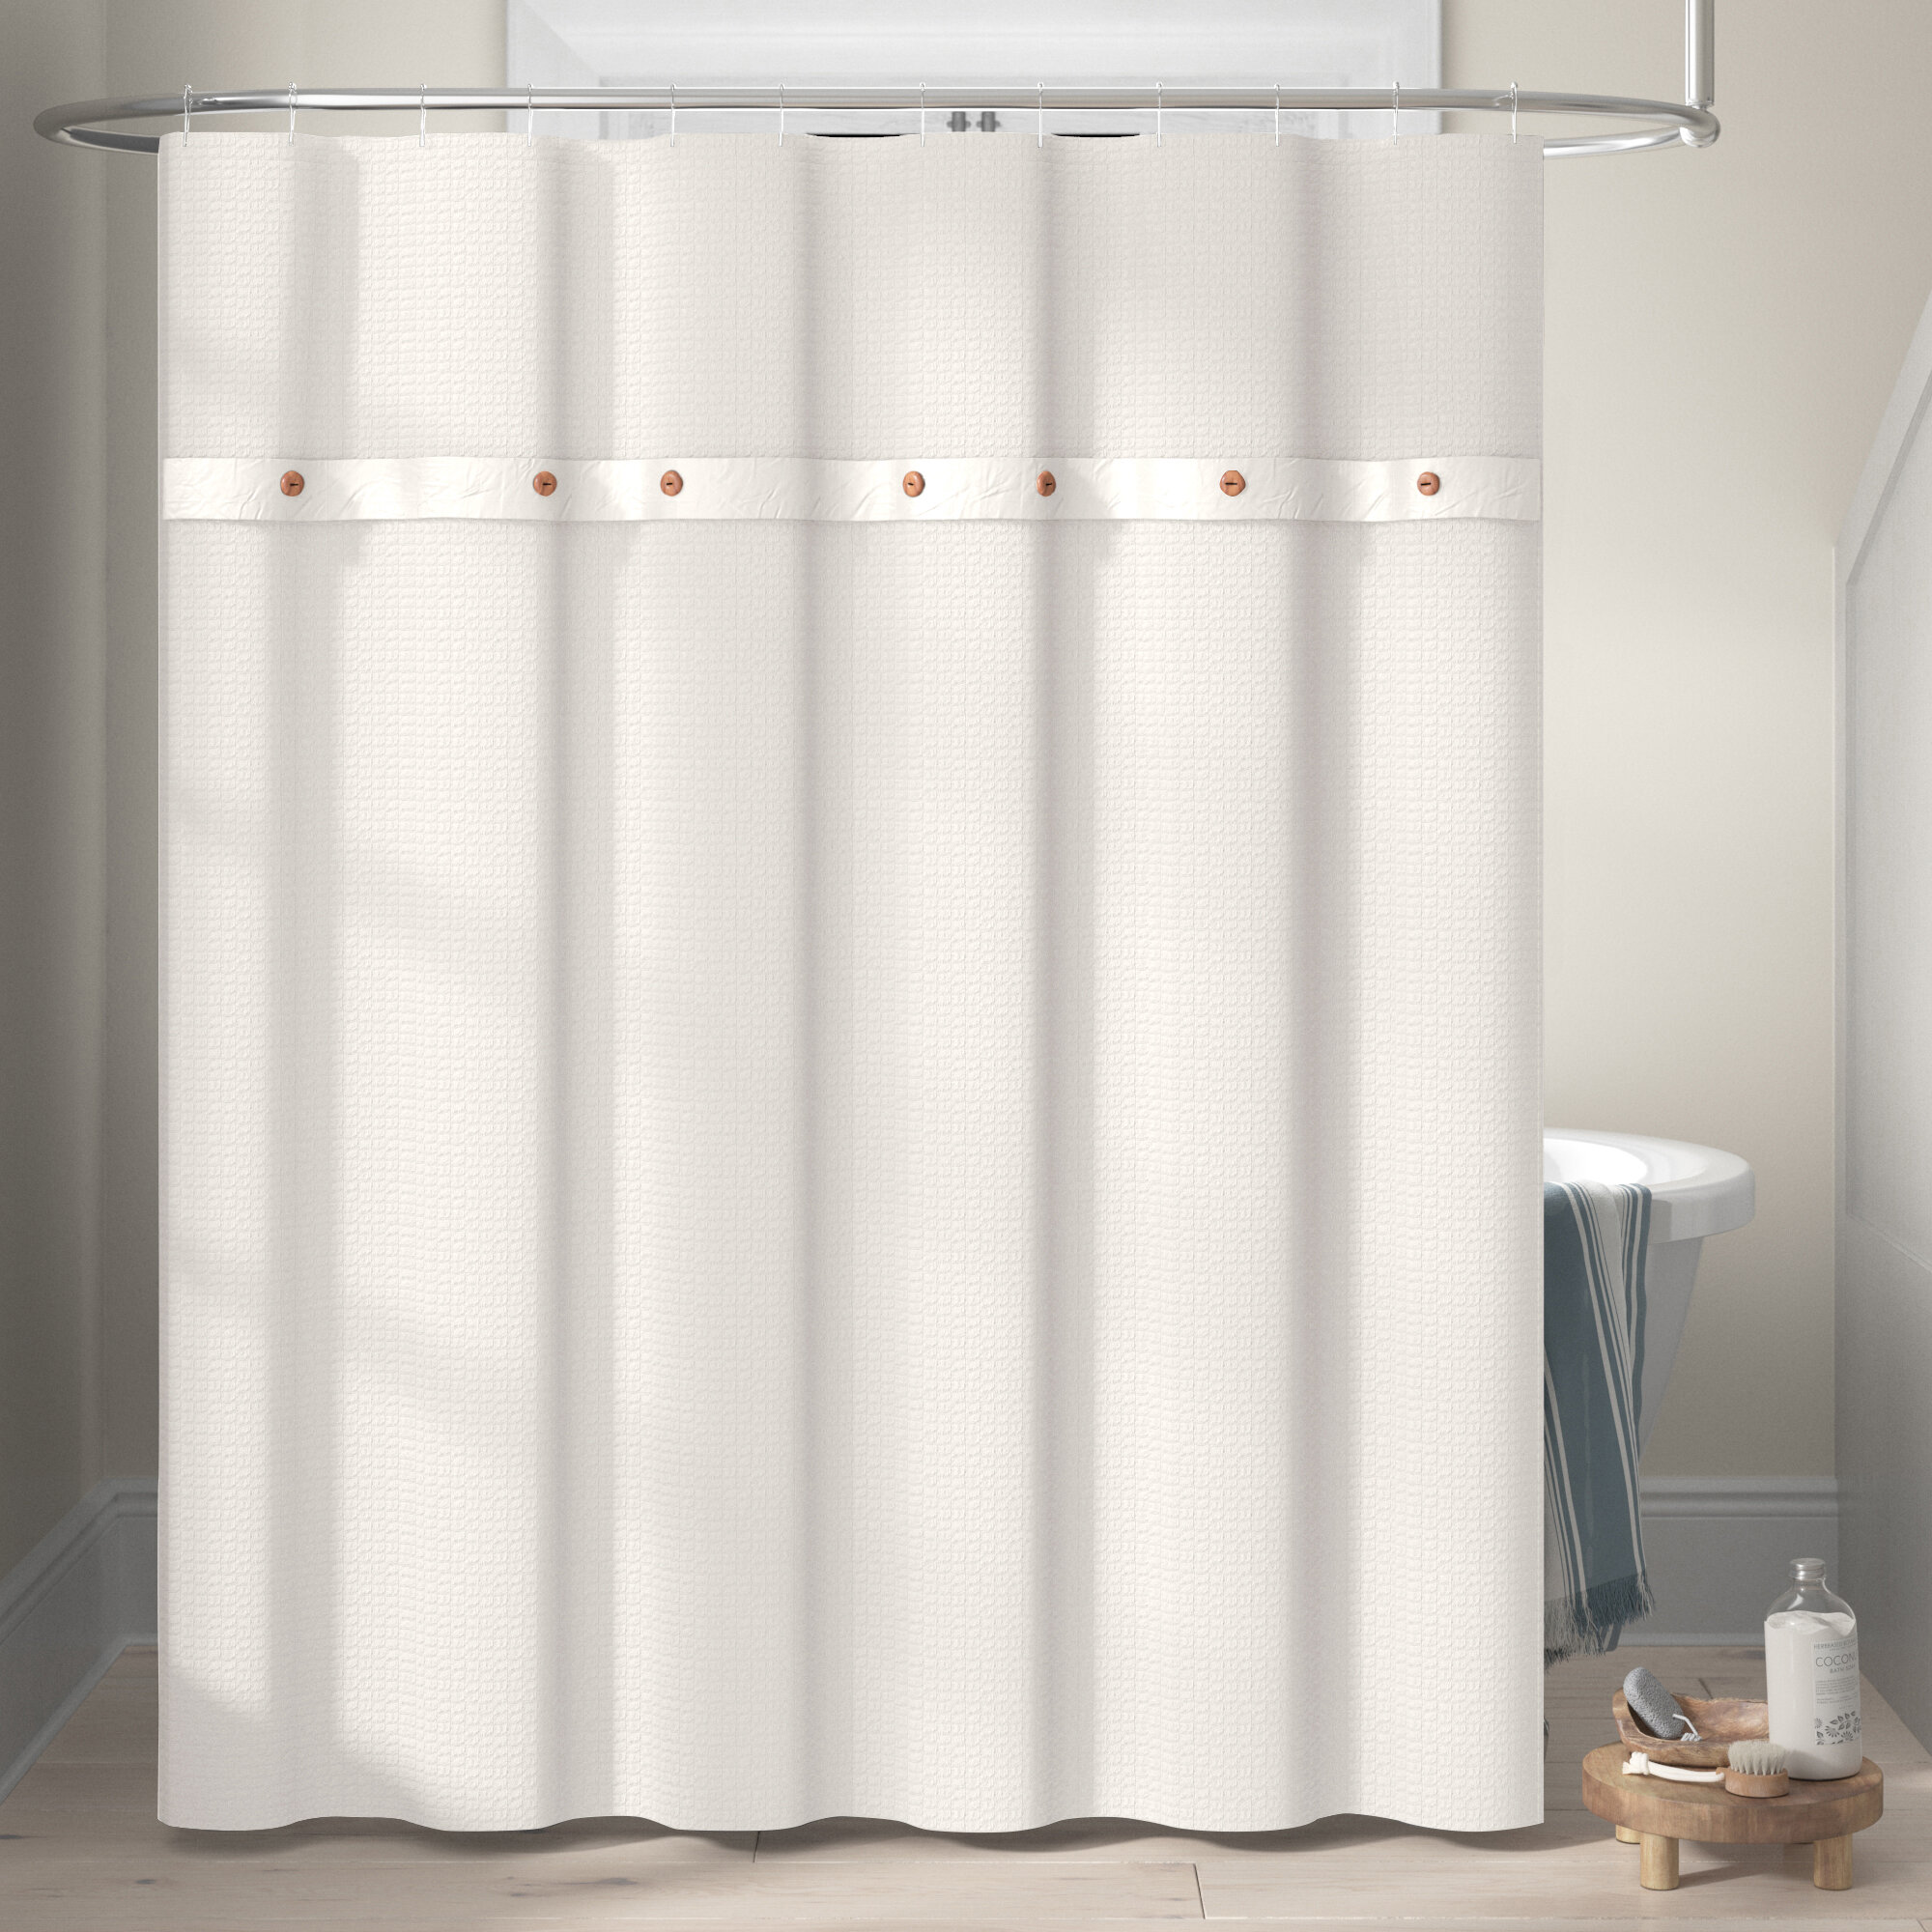 1x nine modern bathroom shower curtains extra long with hooks sc 